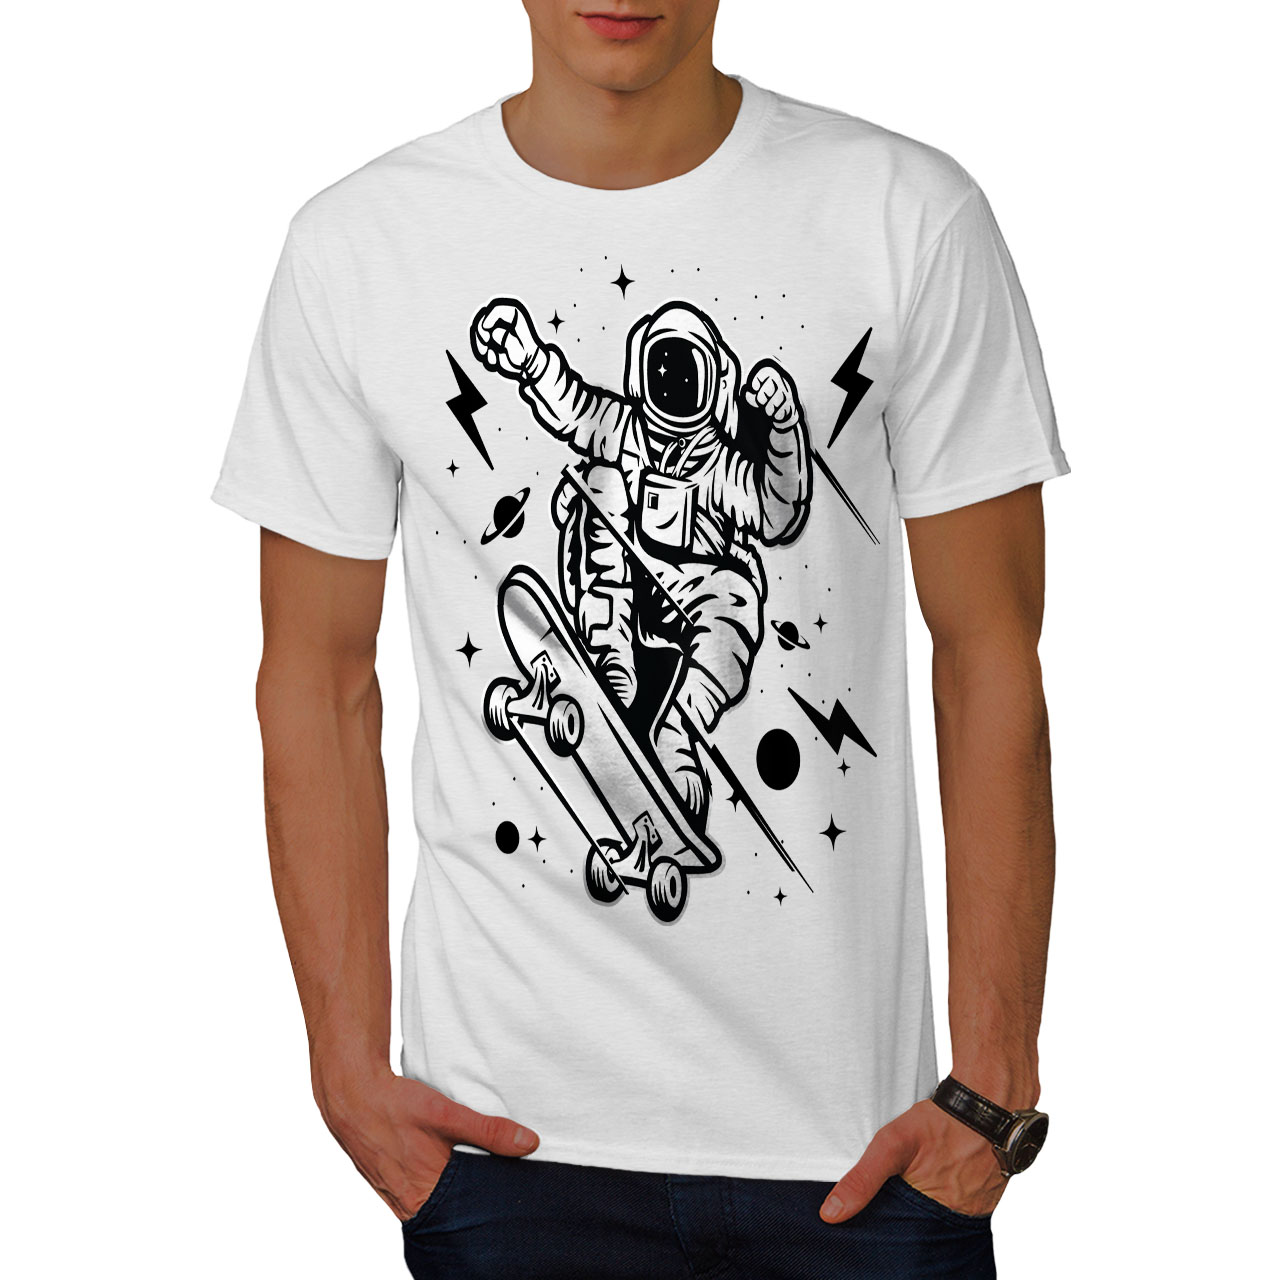 Wellcoda Space Man Mens T Shirt Astronaut Graphic Design Printed Tee